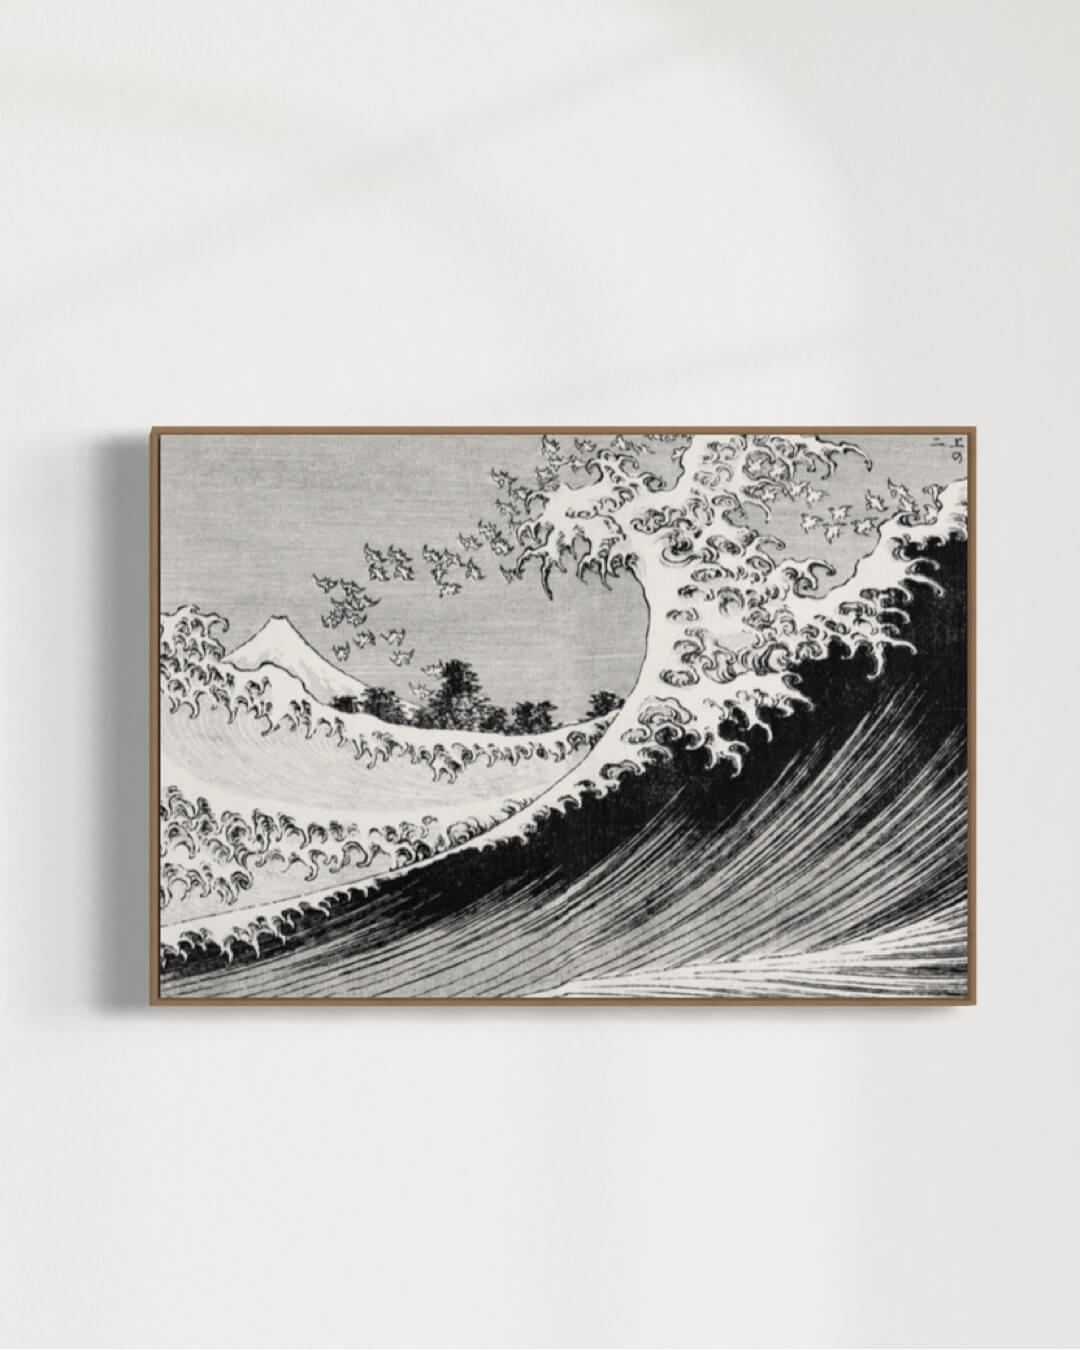 Hokusai's One Hundred Views of Mount Fuji